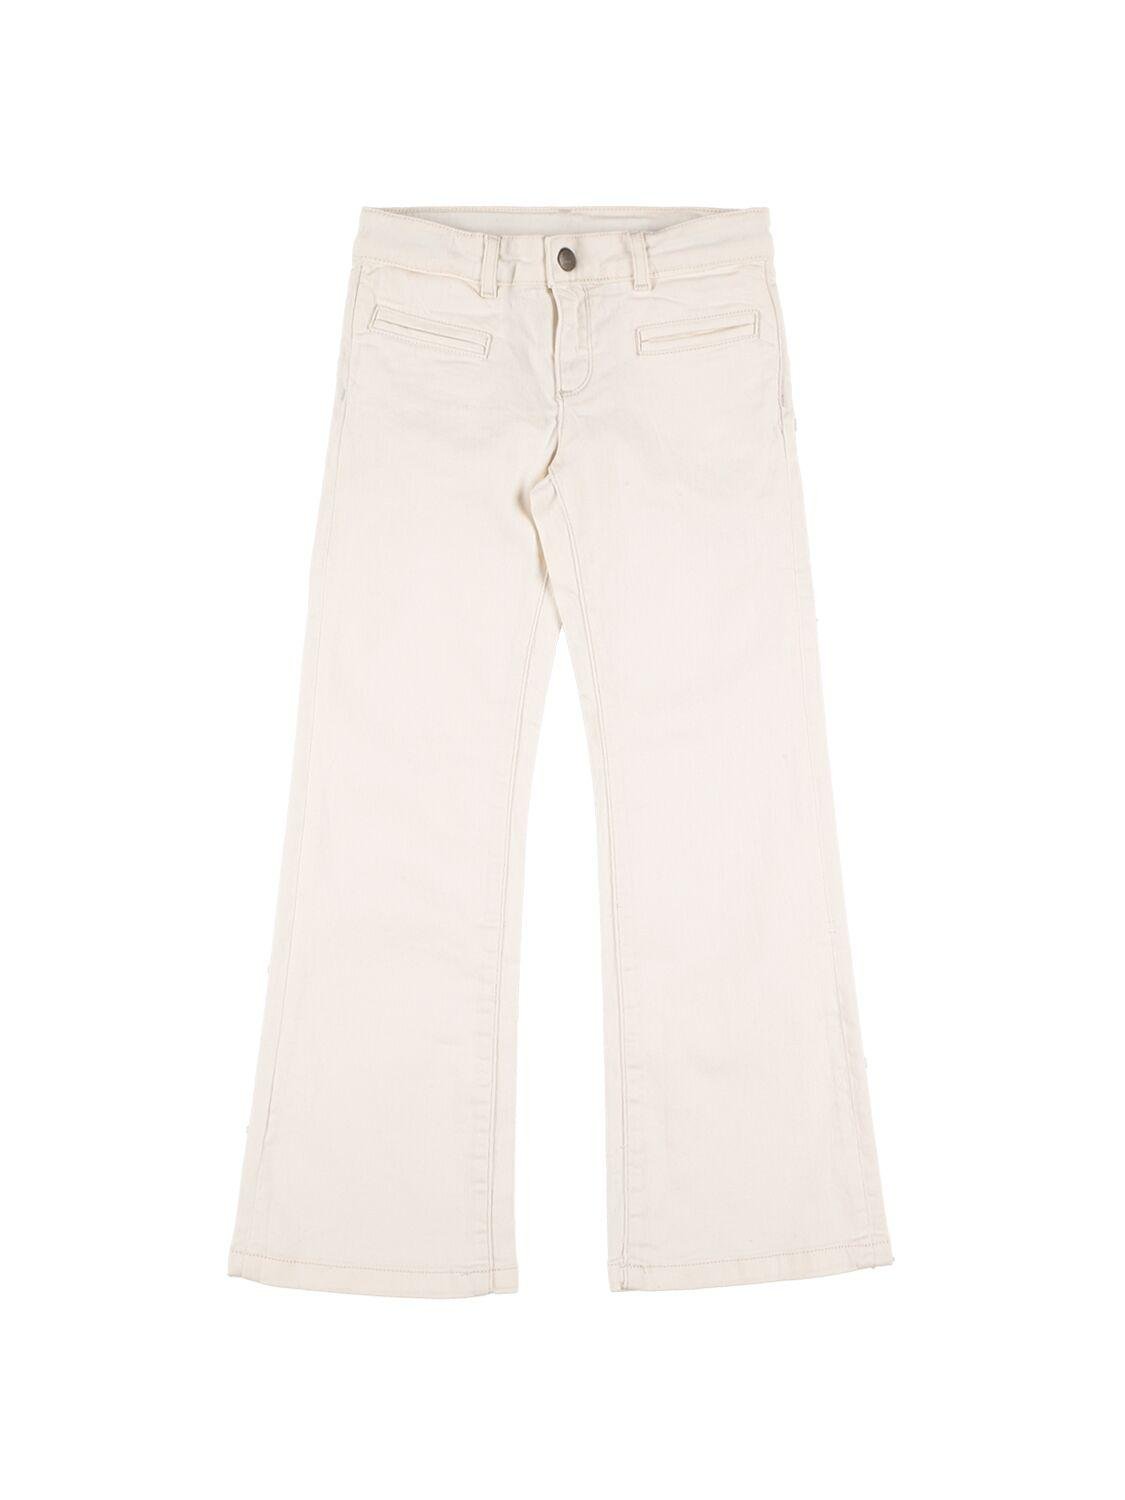 Stretch Cotton Denim Jeans by BONPOINT